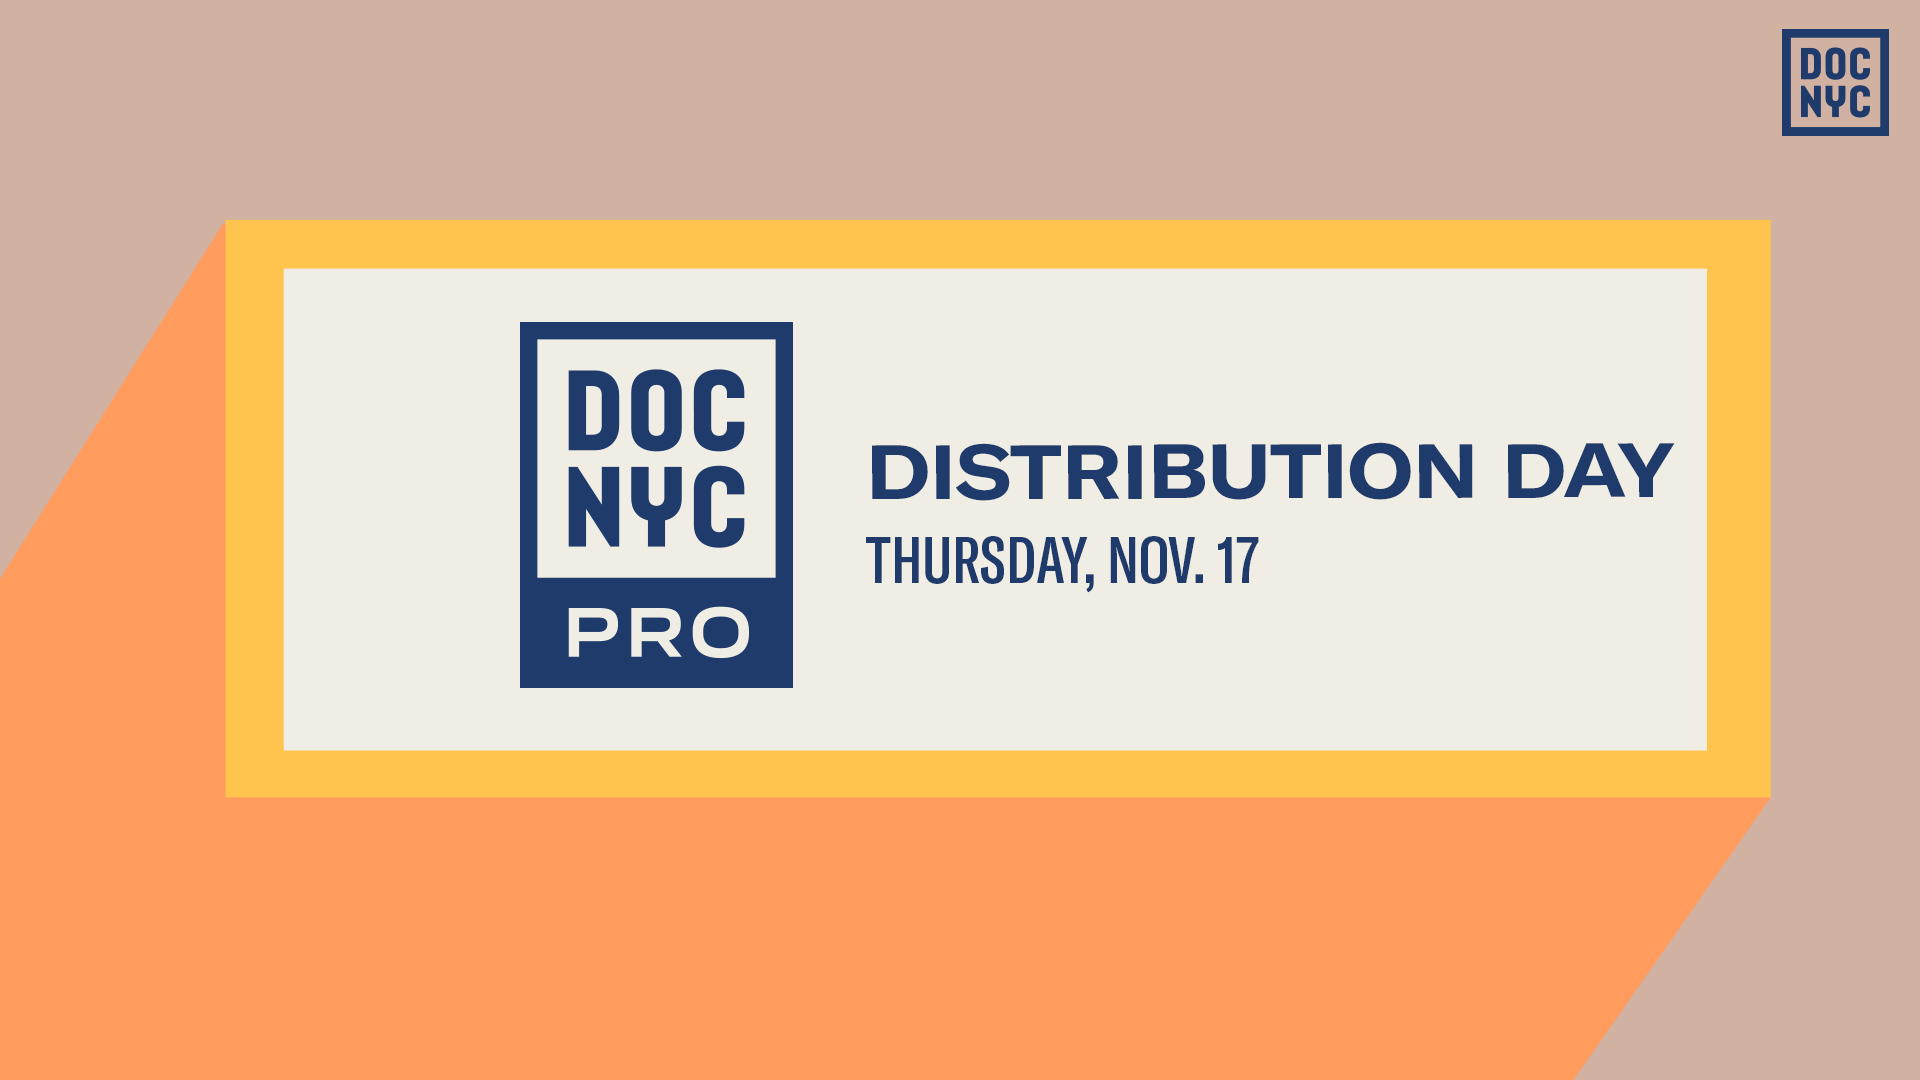 Distribution Day (Nov. 17)